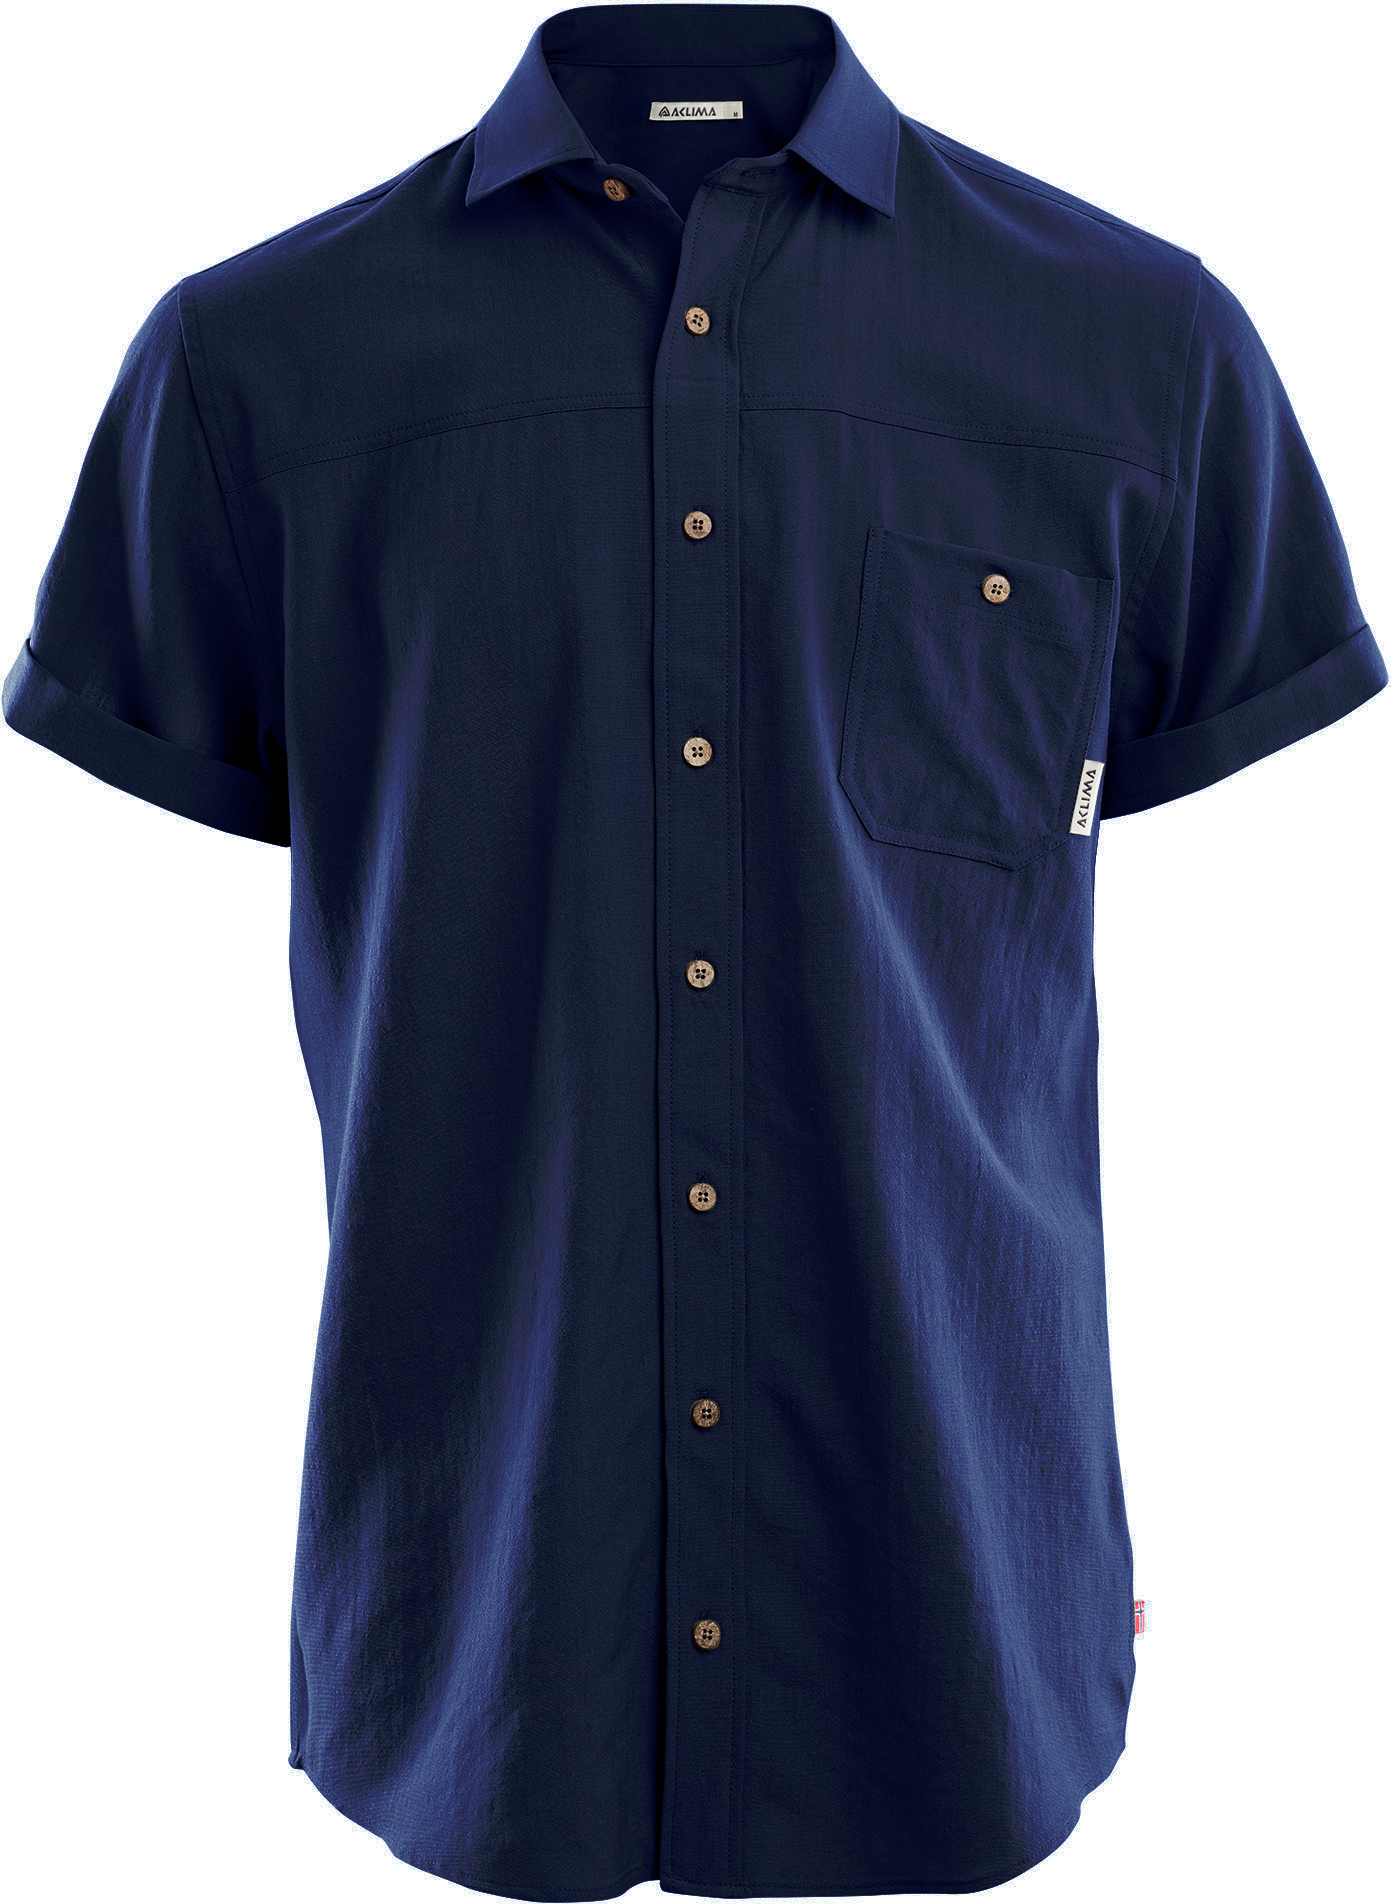 Aclima Aclima LeisureWool Short Sleeve Shirt Man Navy Blazer L, Navy Blazer